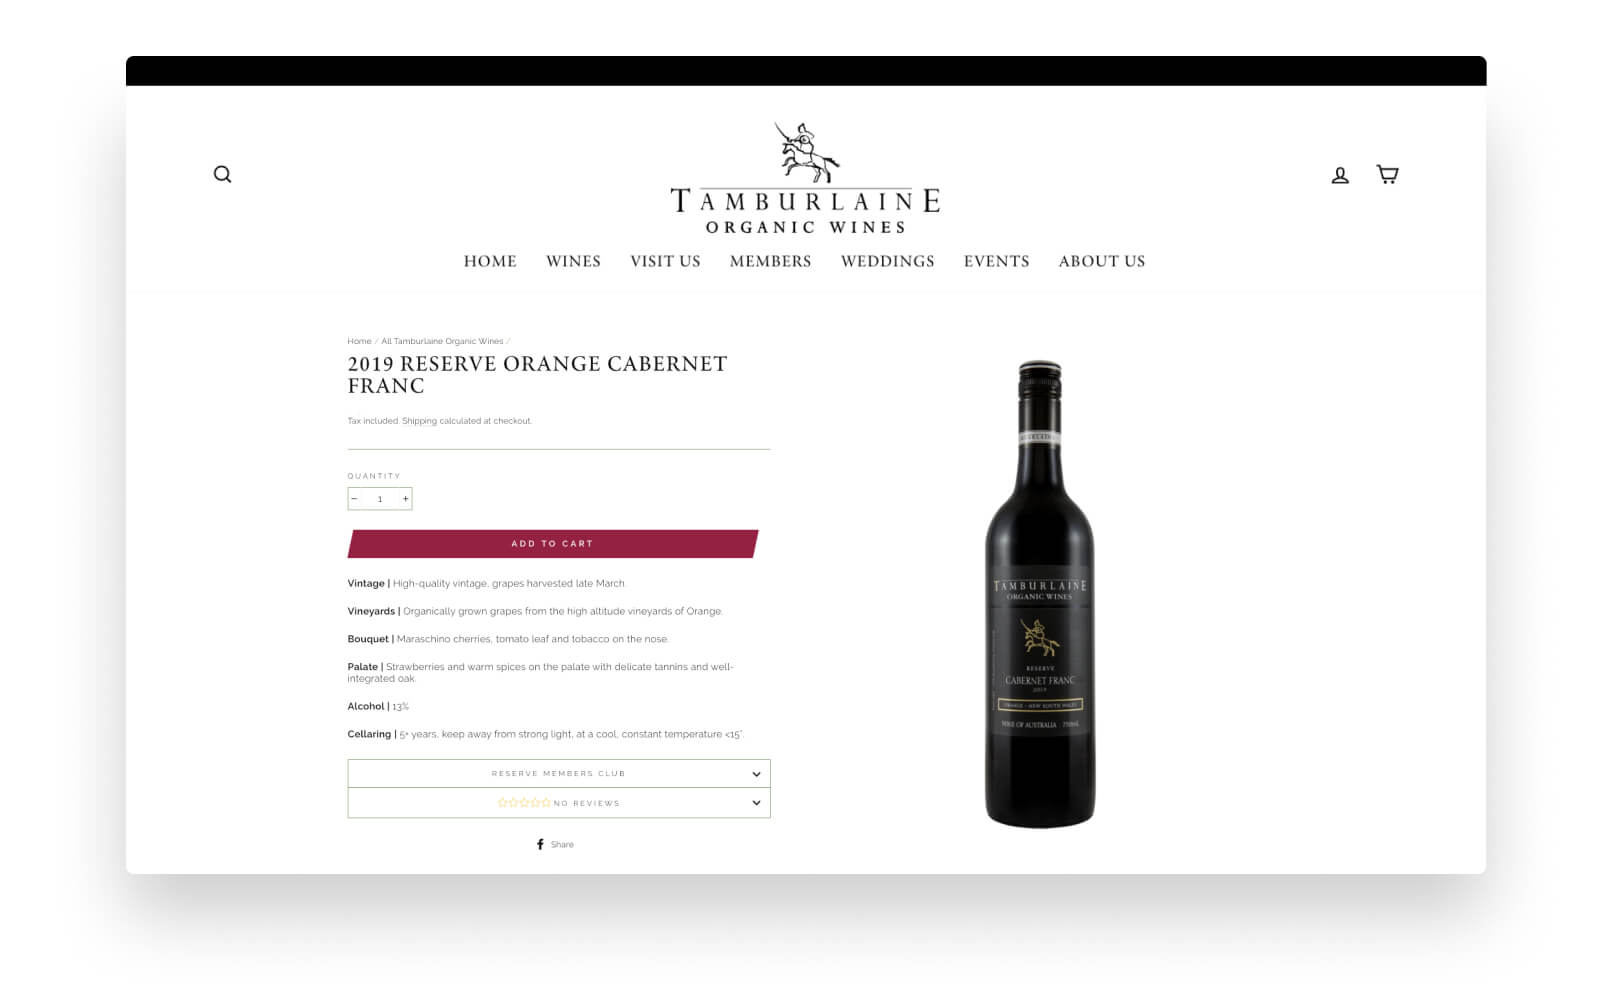 Tamburlaine Organic Wines' website